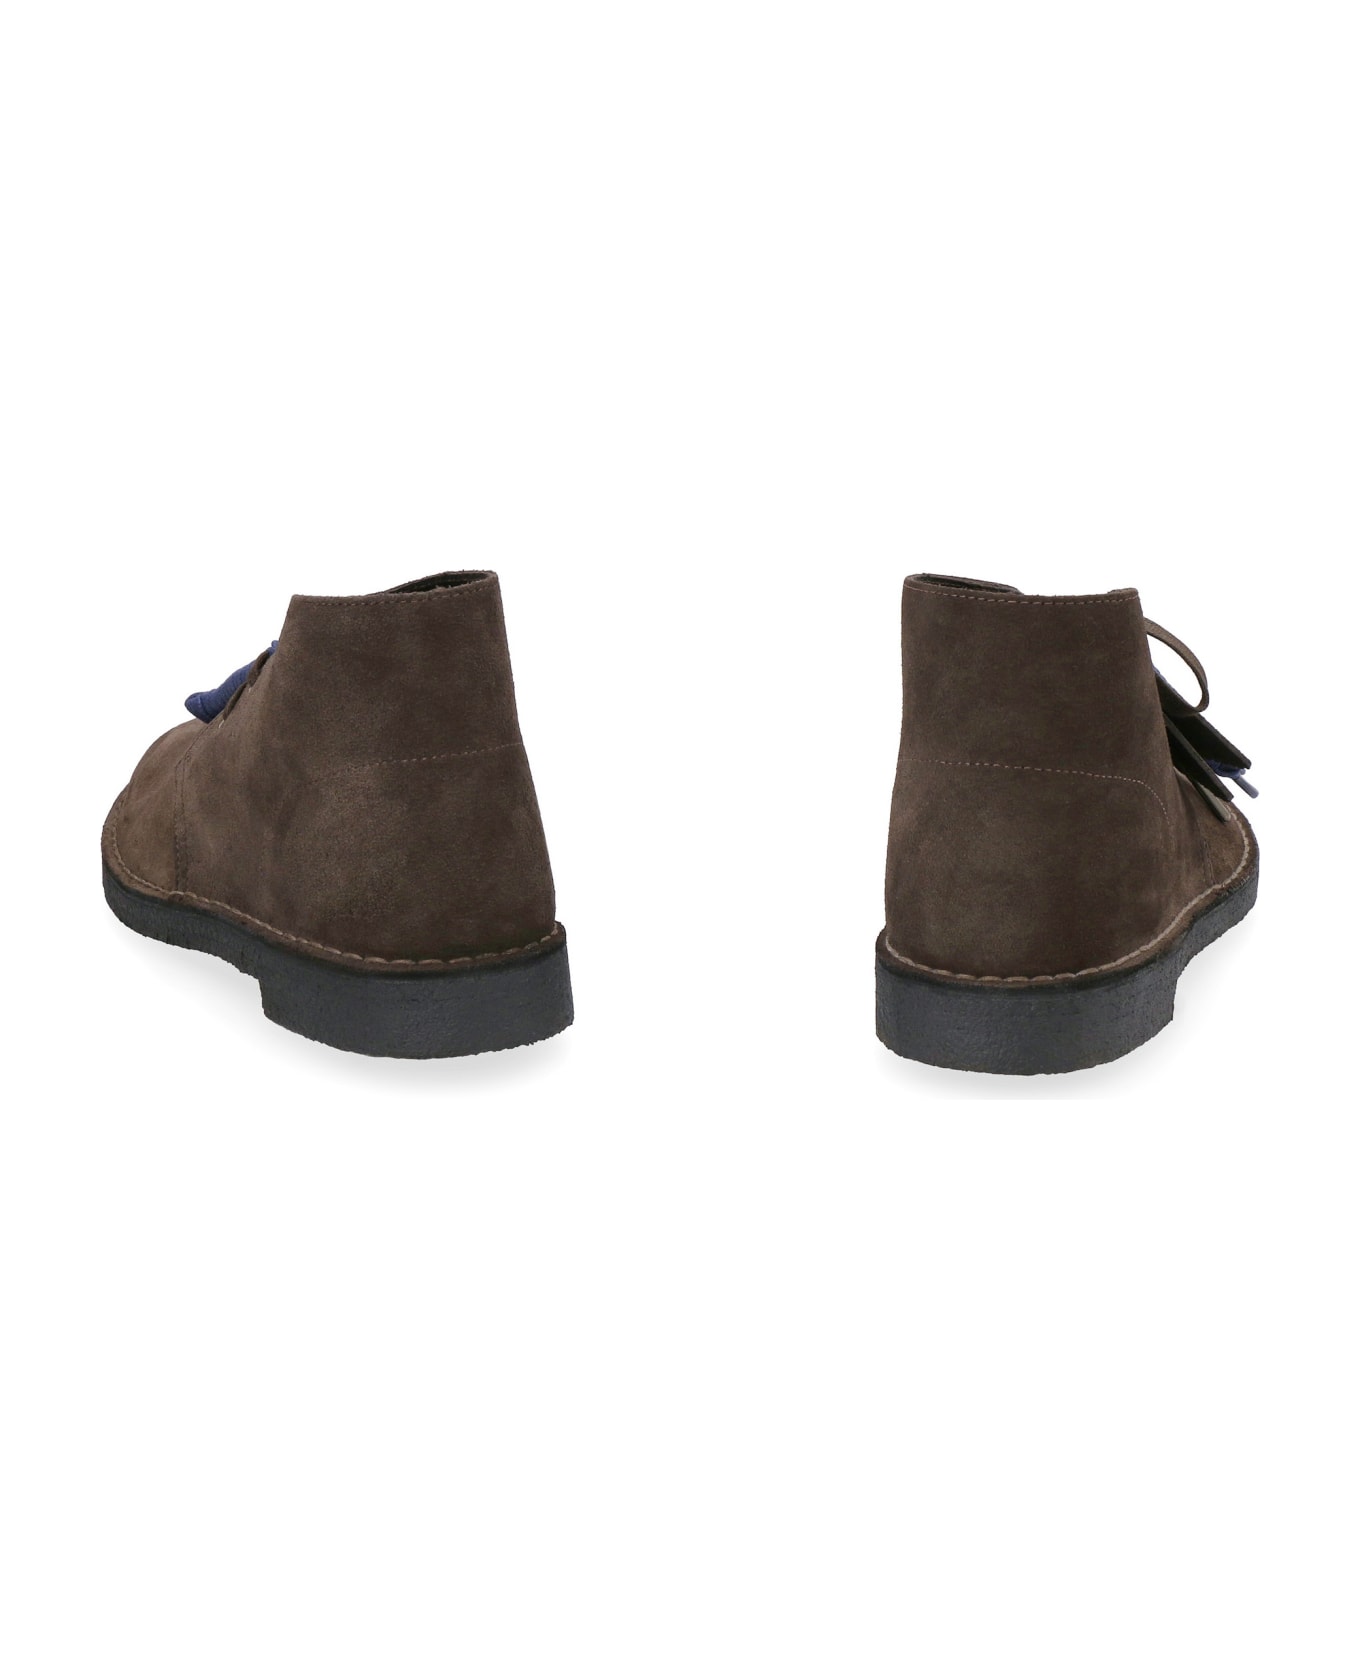 Clarks Suede Desert Boots - brown